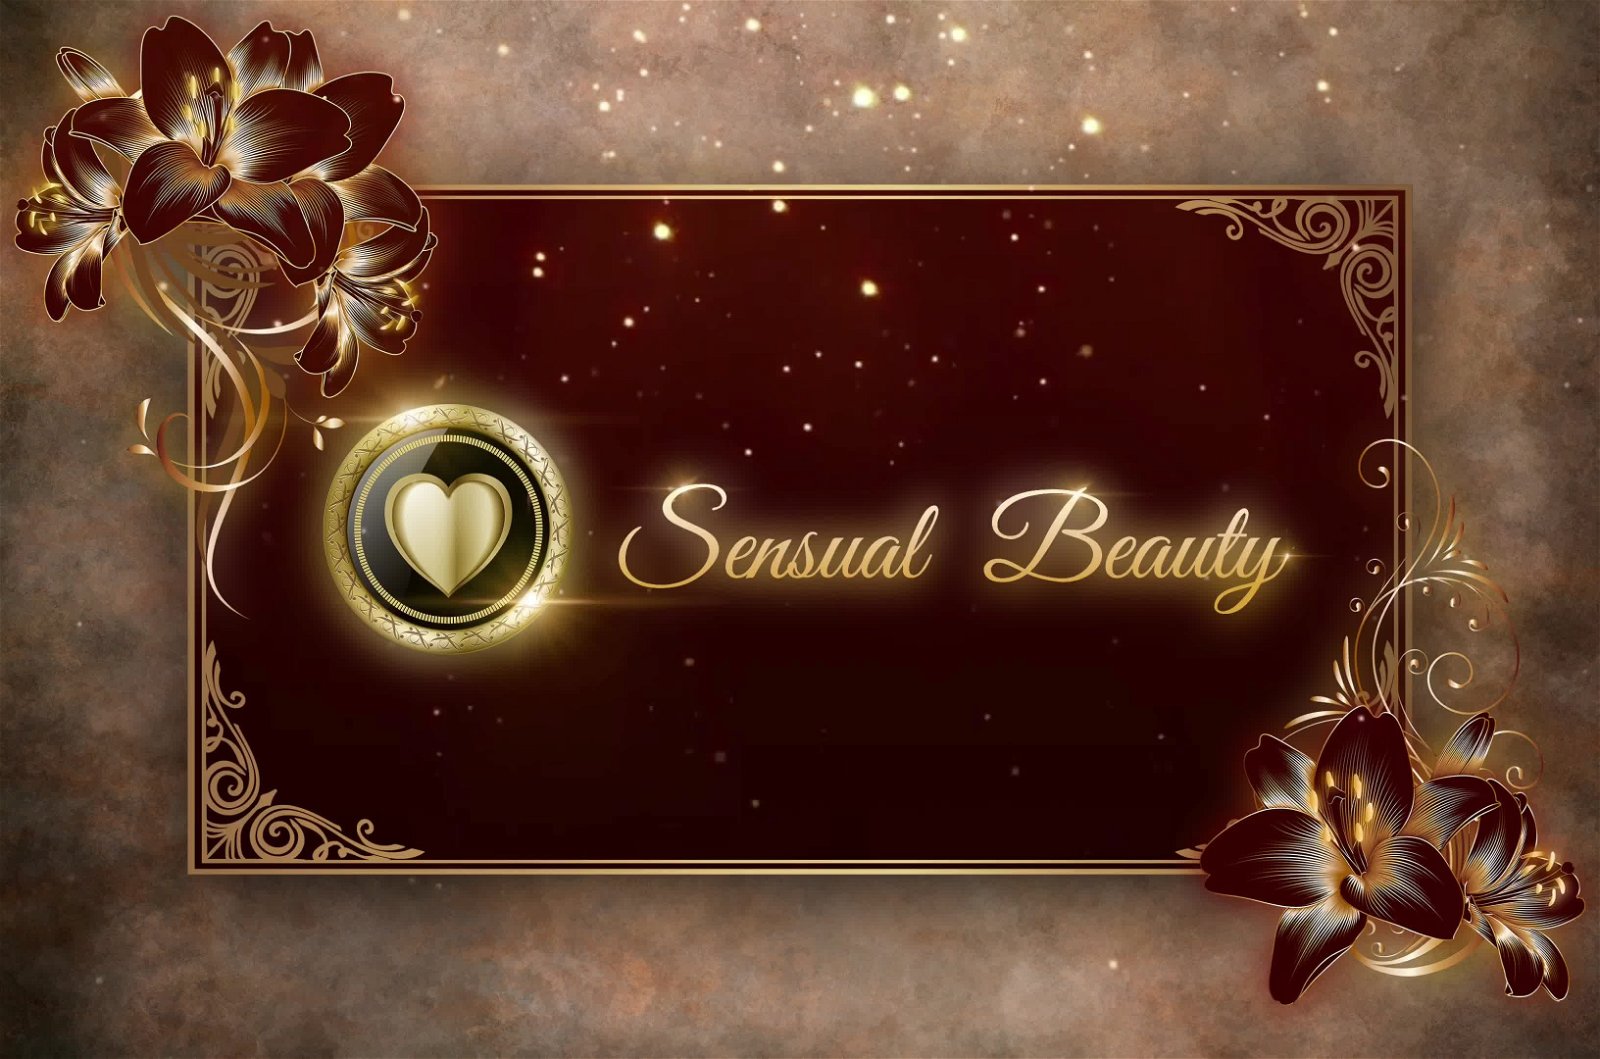 sensualbeauty-logo-burgundy-flowers